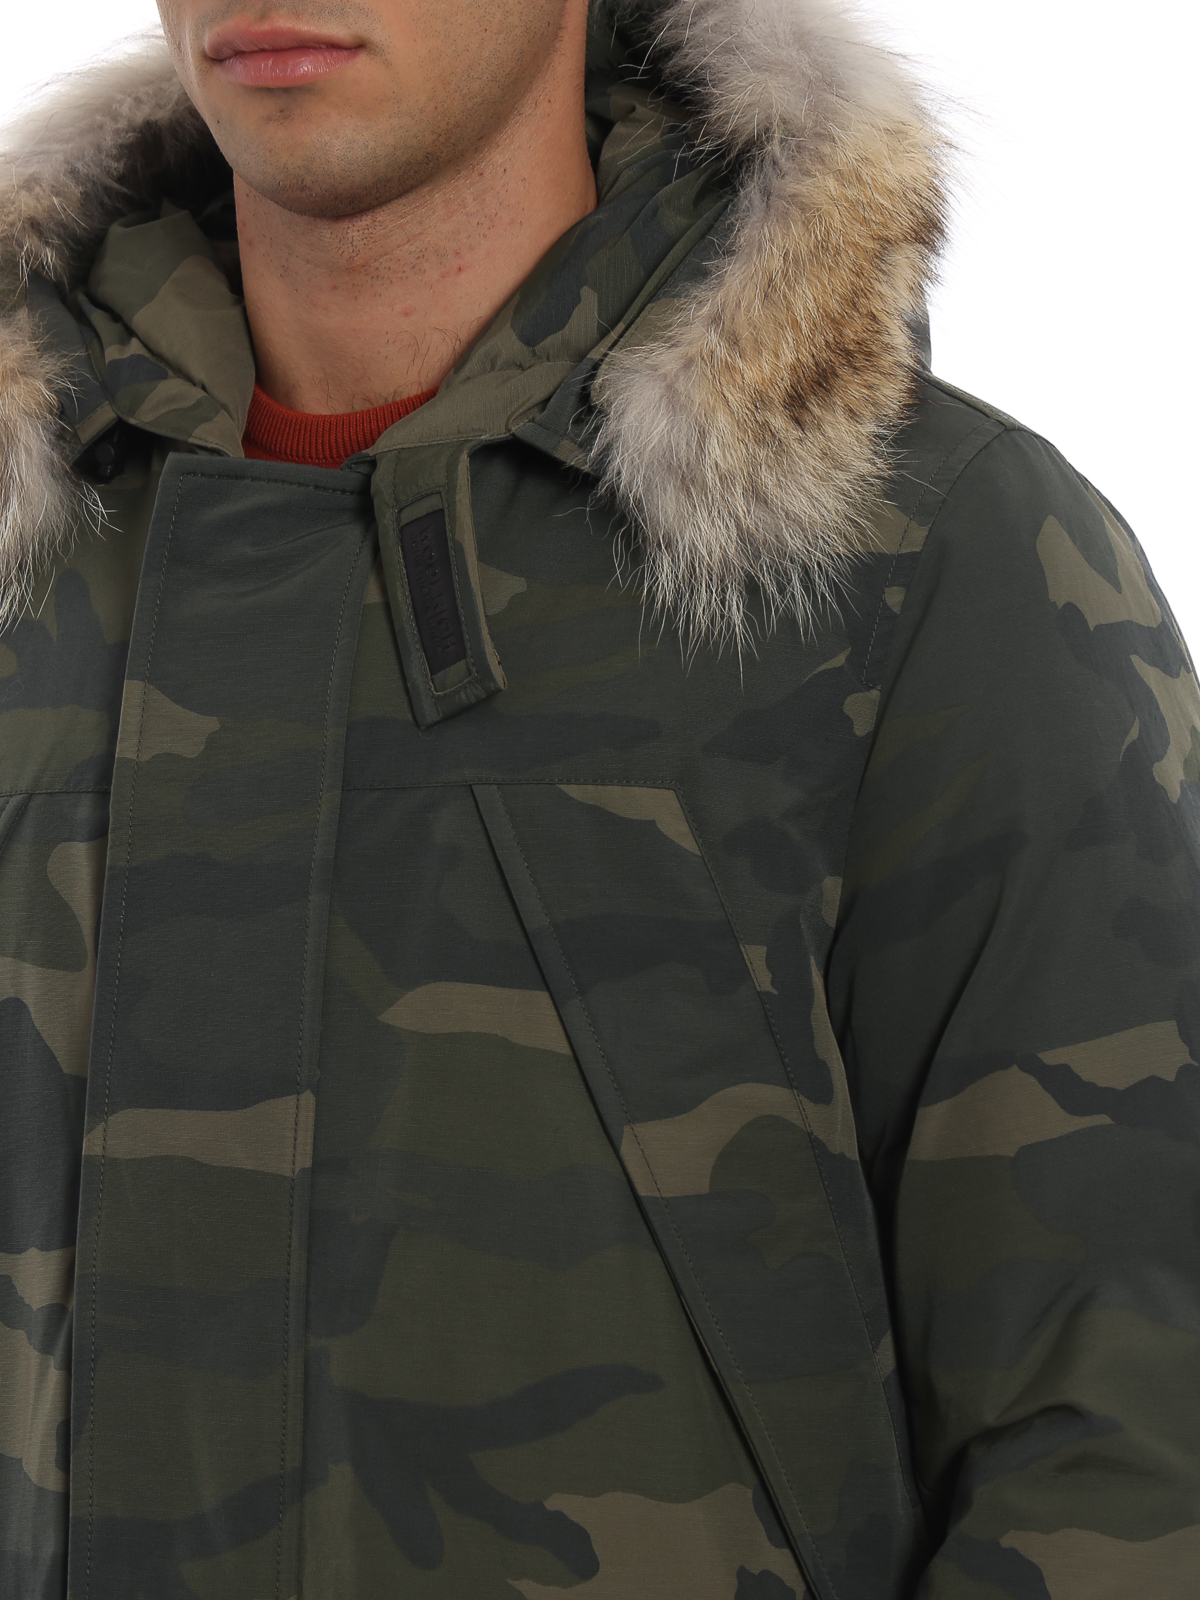 coats - Easton green camouflage parka - WOCPS2712PR106423